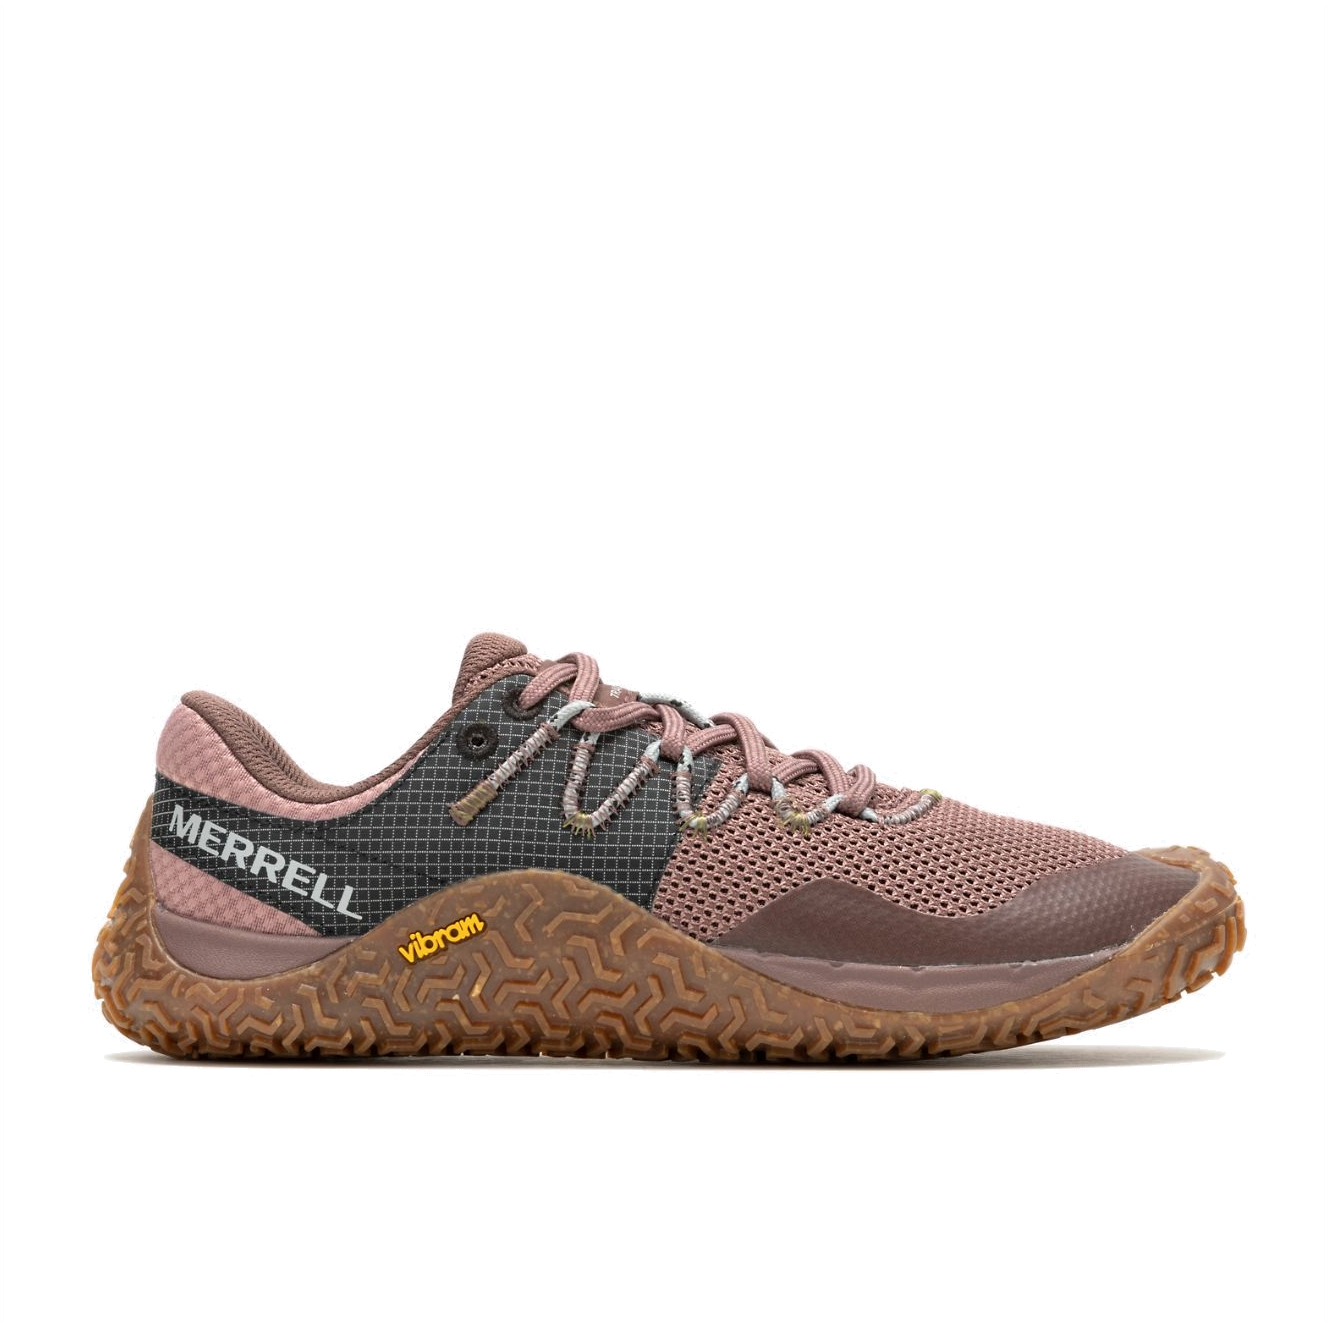 Merrell Trail Glove 7 Barefoot Shoes Women - burlwood | BIKE24